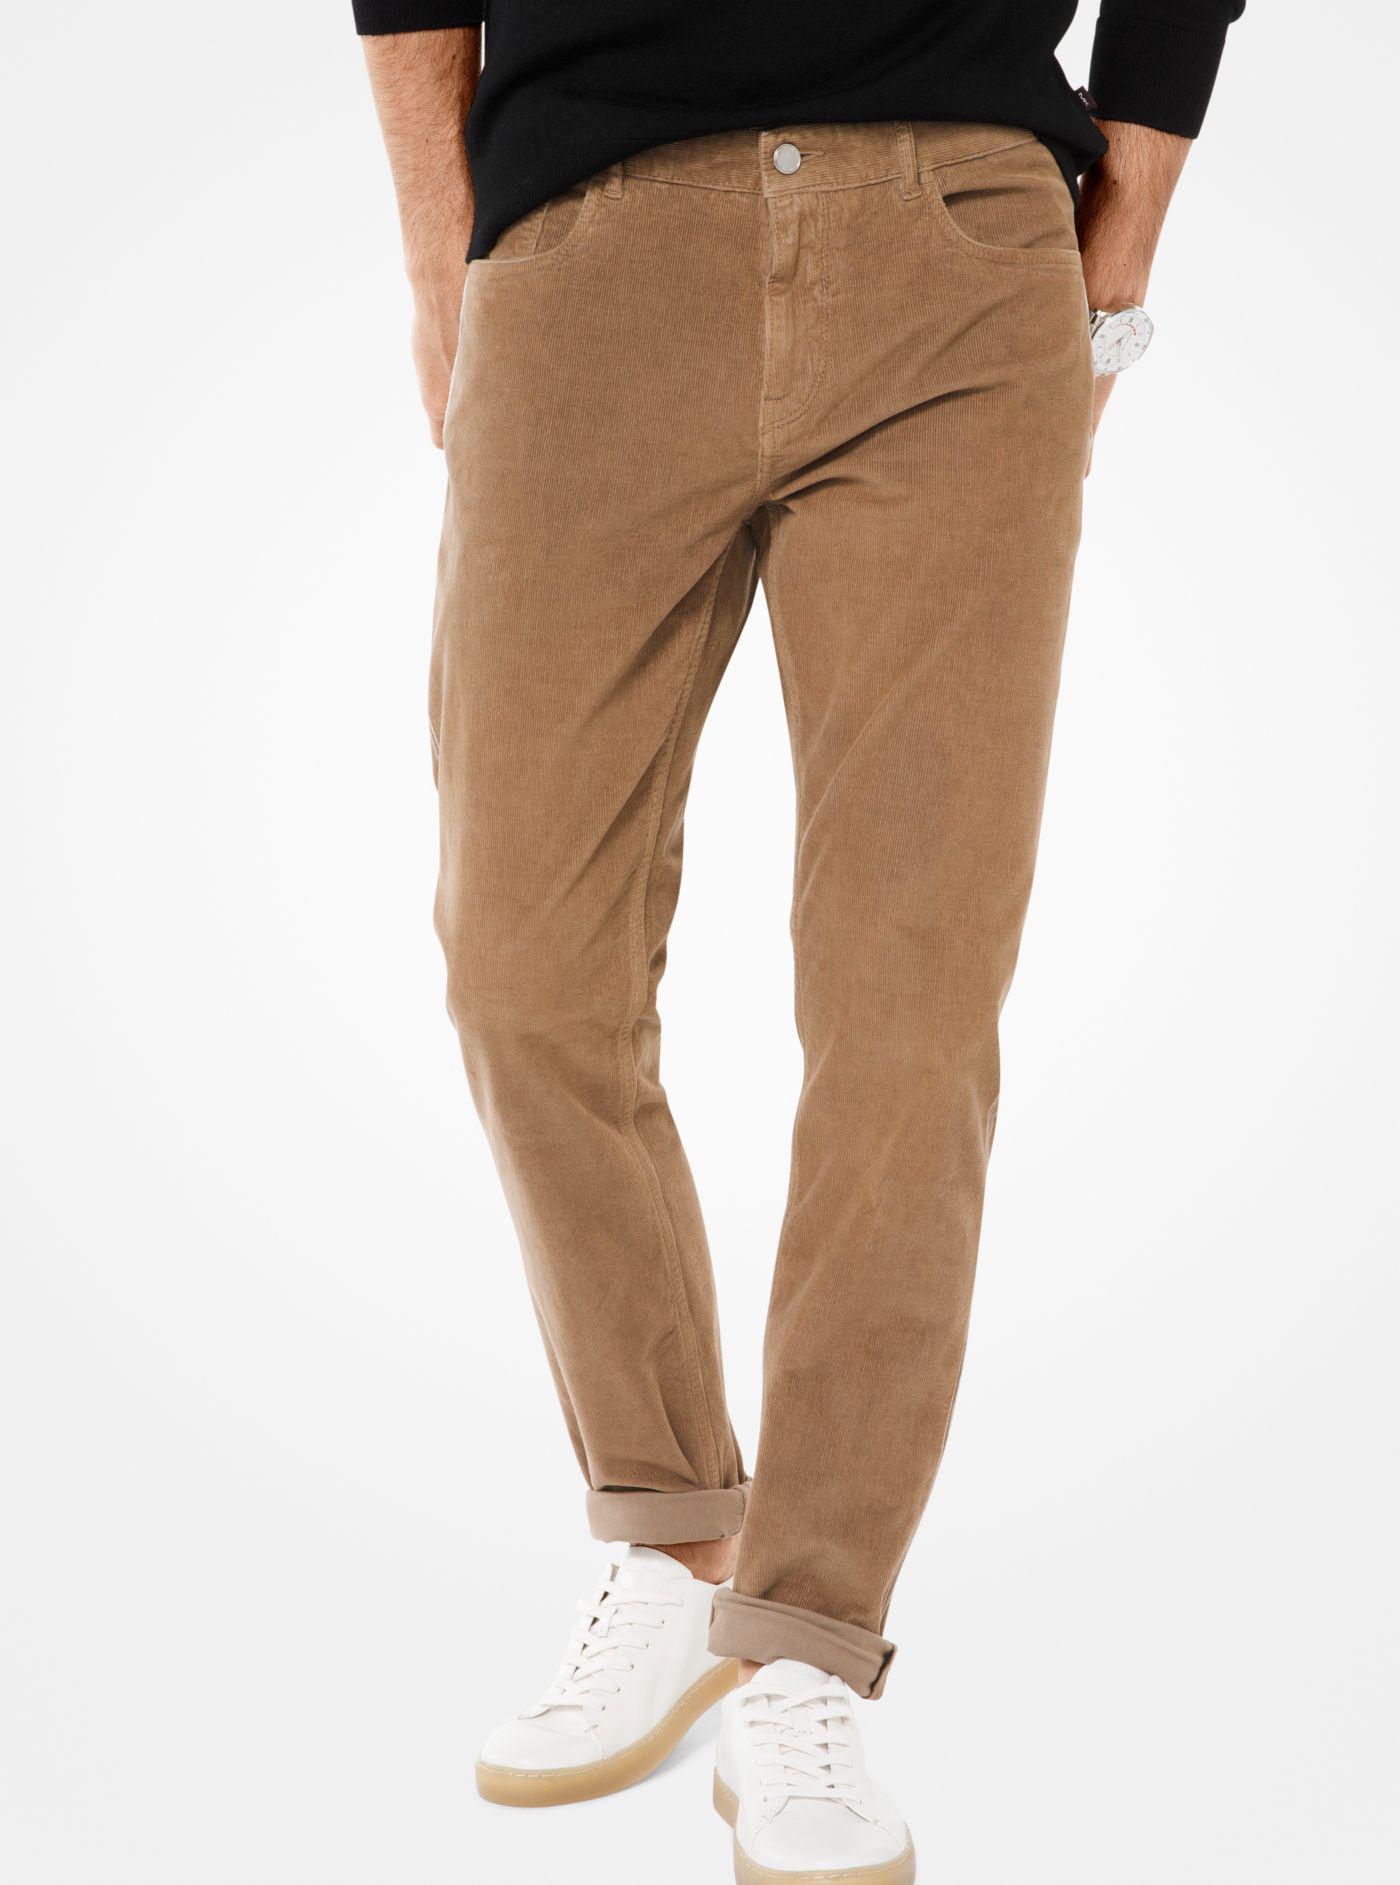 Michael Kors Parker Slim-fit Corduroy Pants in Brown for Men - Lyst